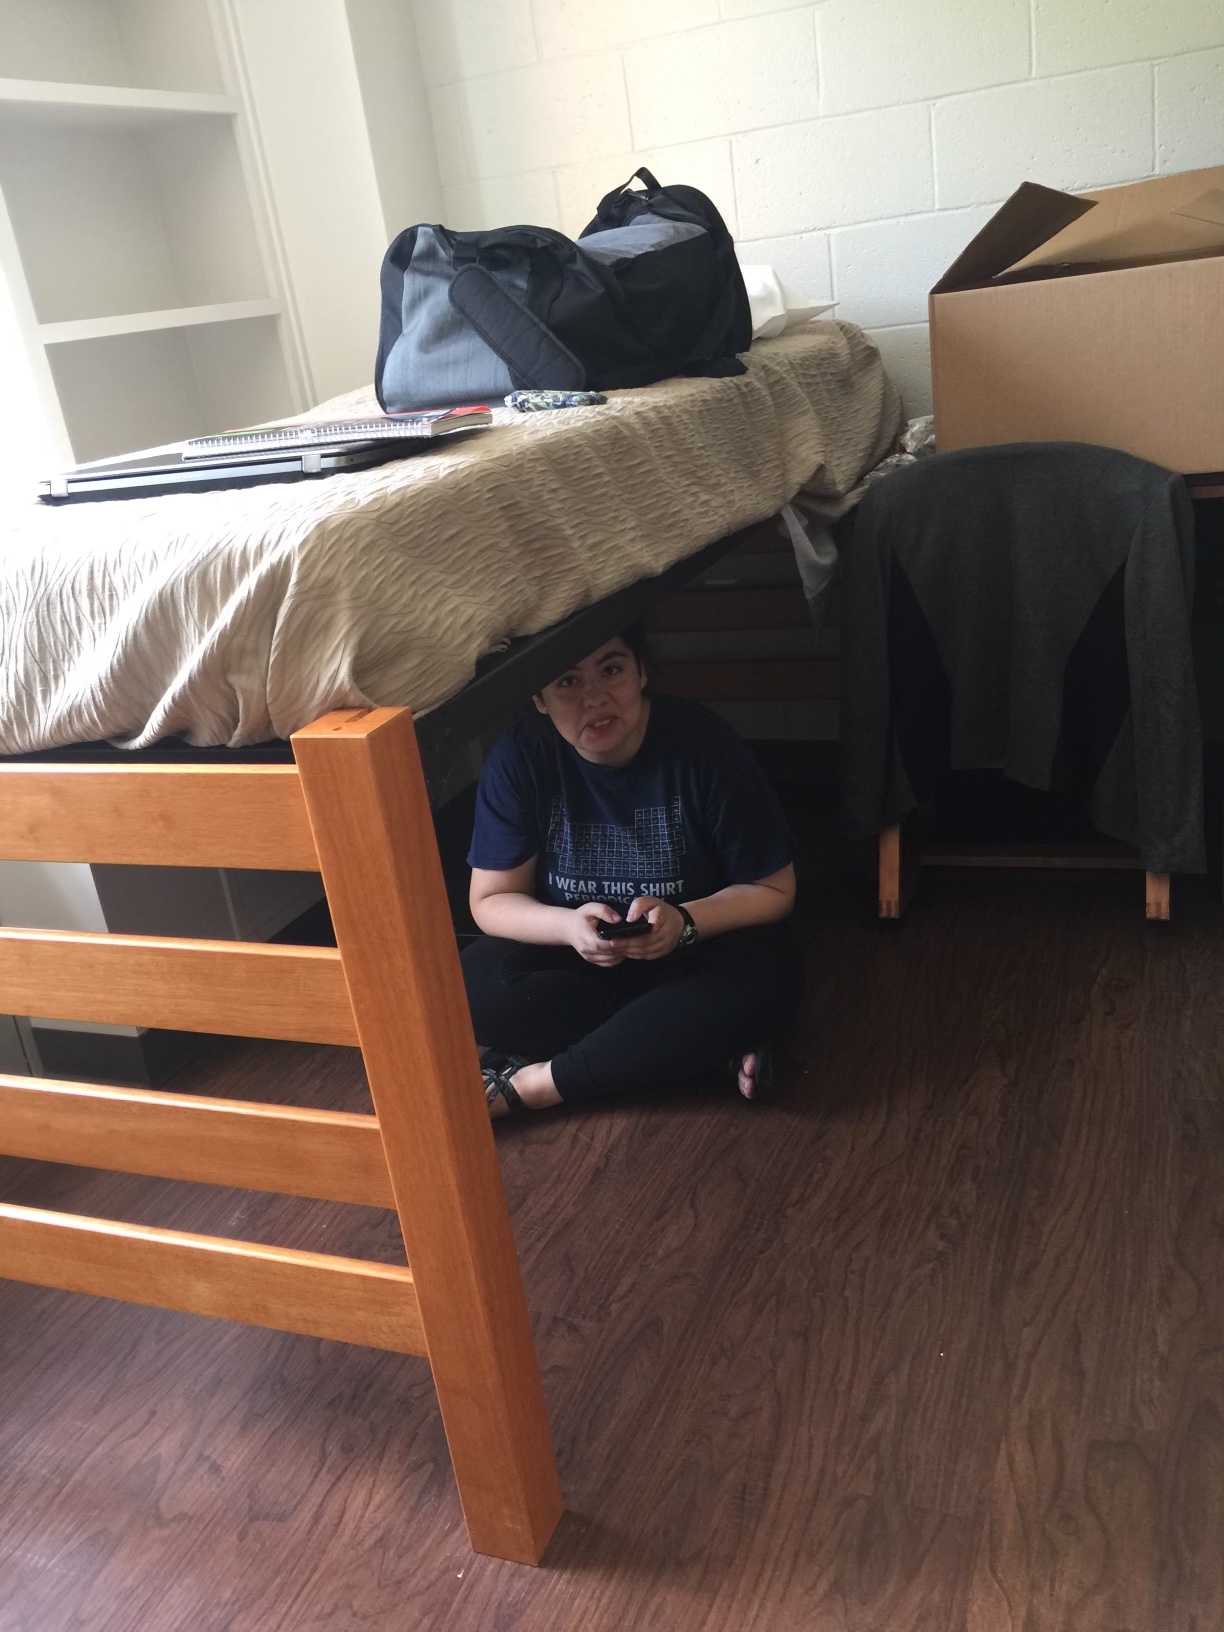 Ari hiding under a bed